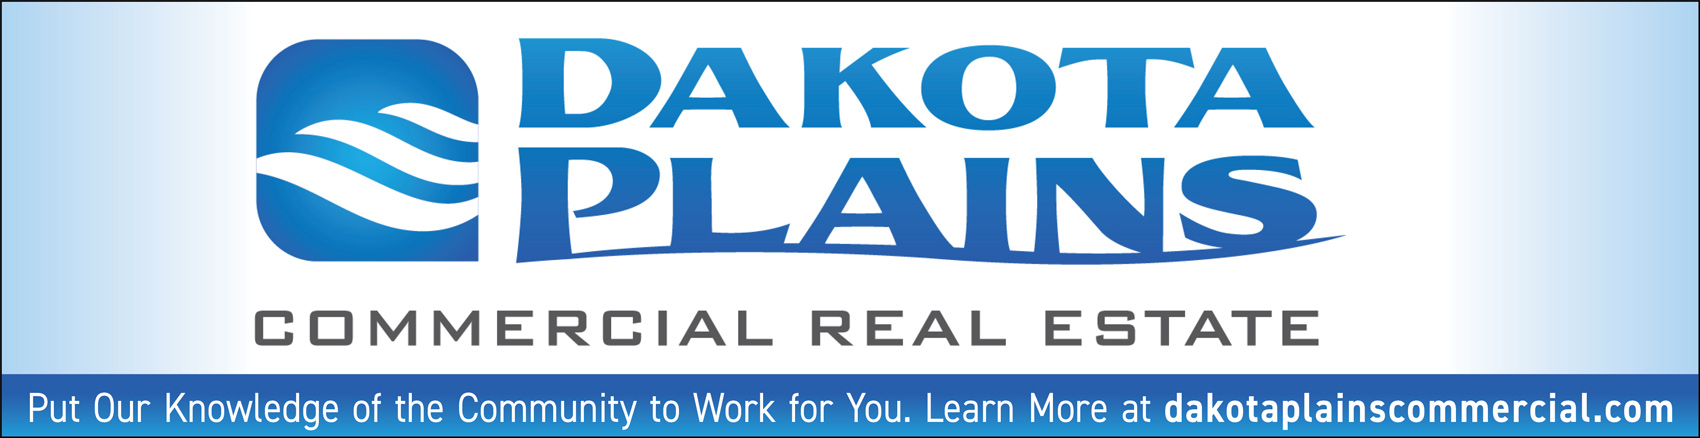 dakota plains commercial real estate 970x250 1